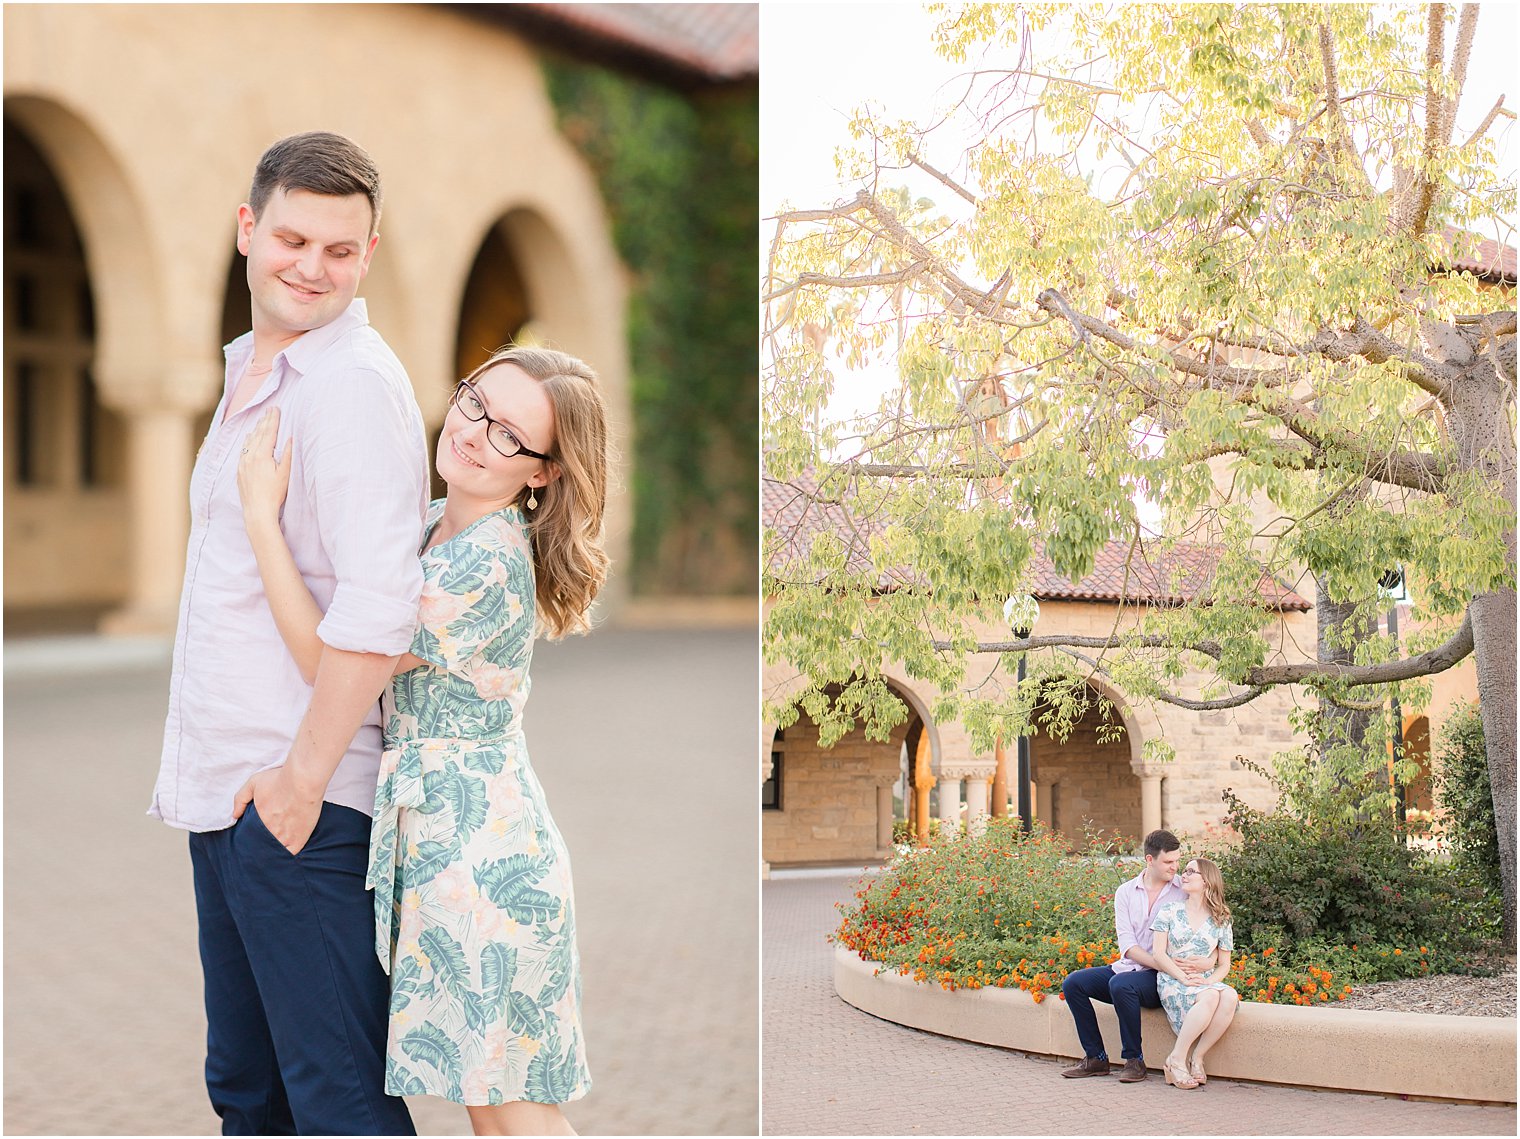 Engagement photos at Stanford University